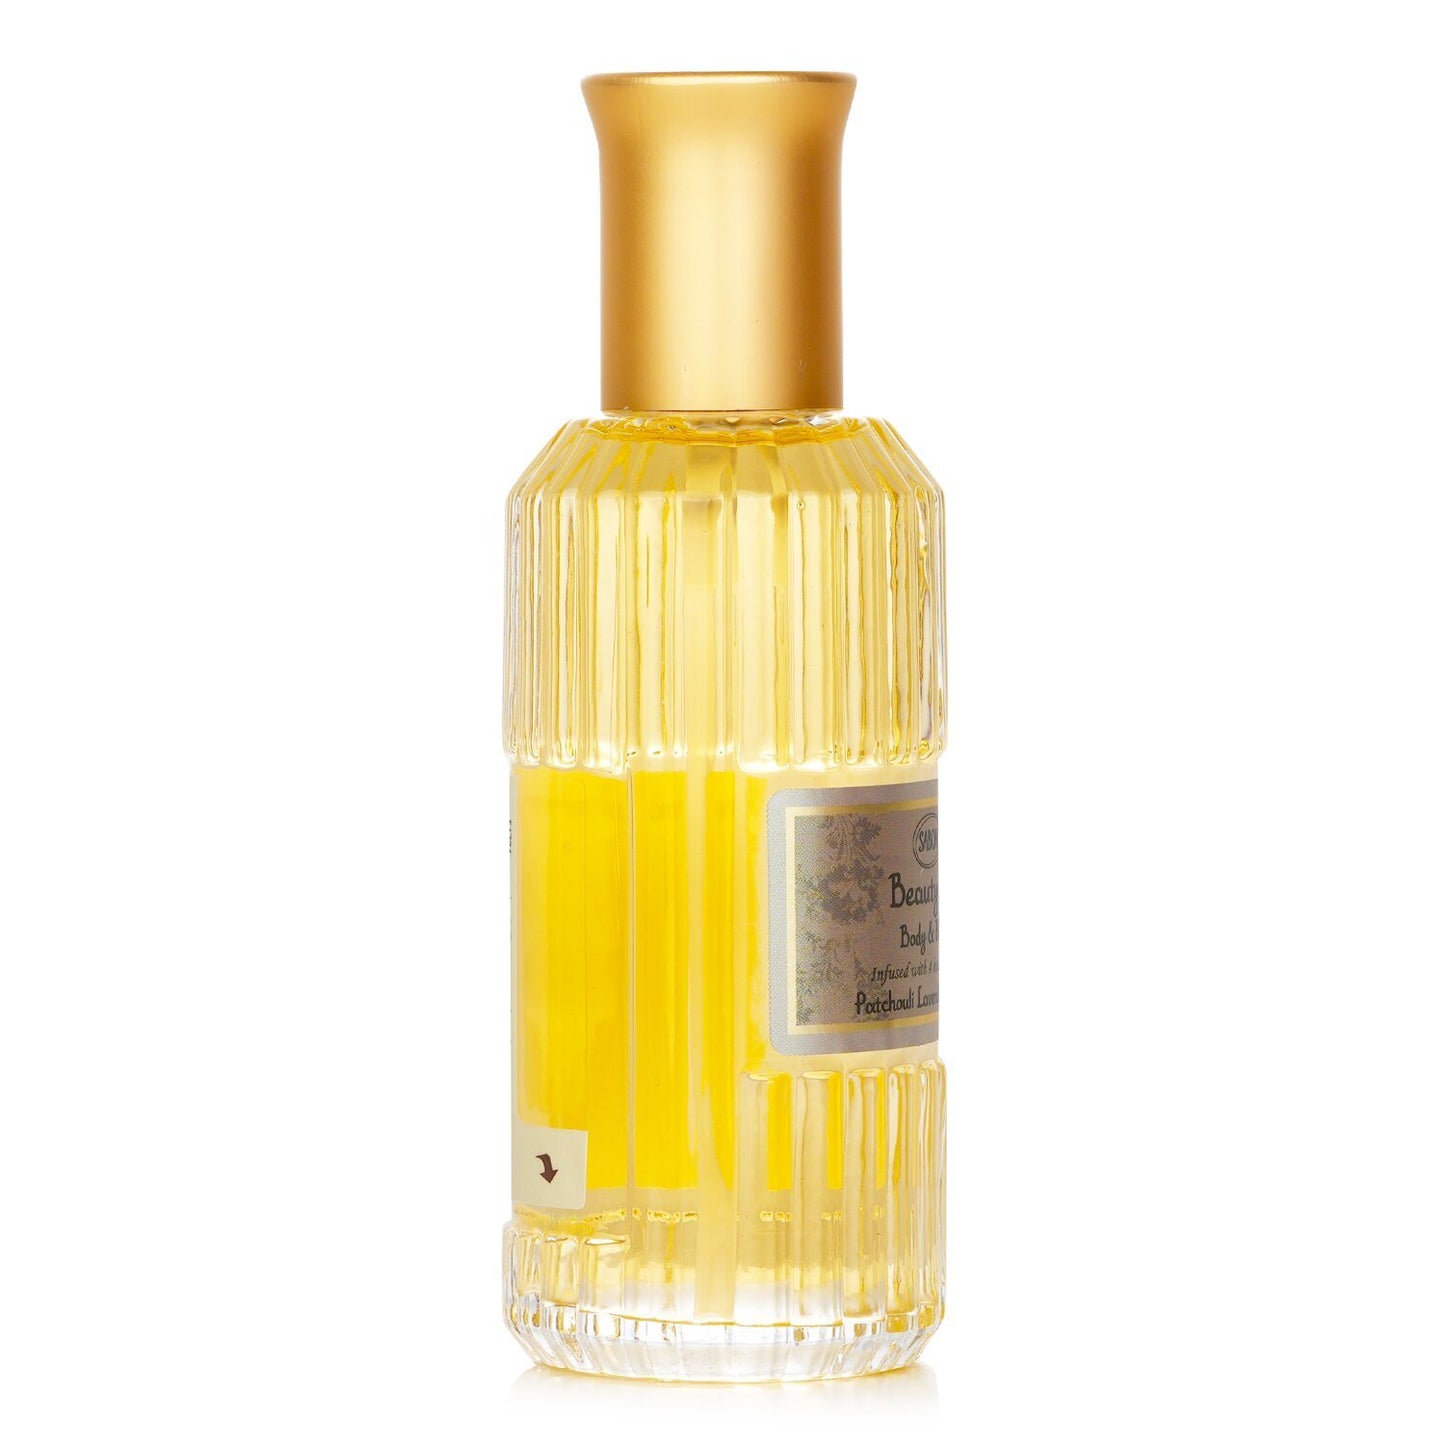 SABON - Beauty Oil - Patchouli Lavender Vanilla 044127 100ml/3.4oz - lolaluxeshop